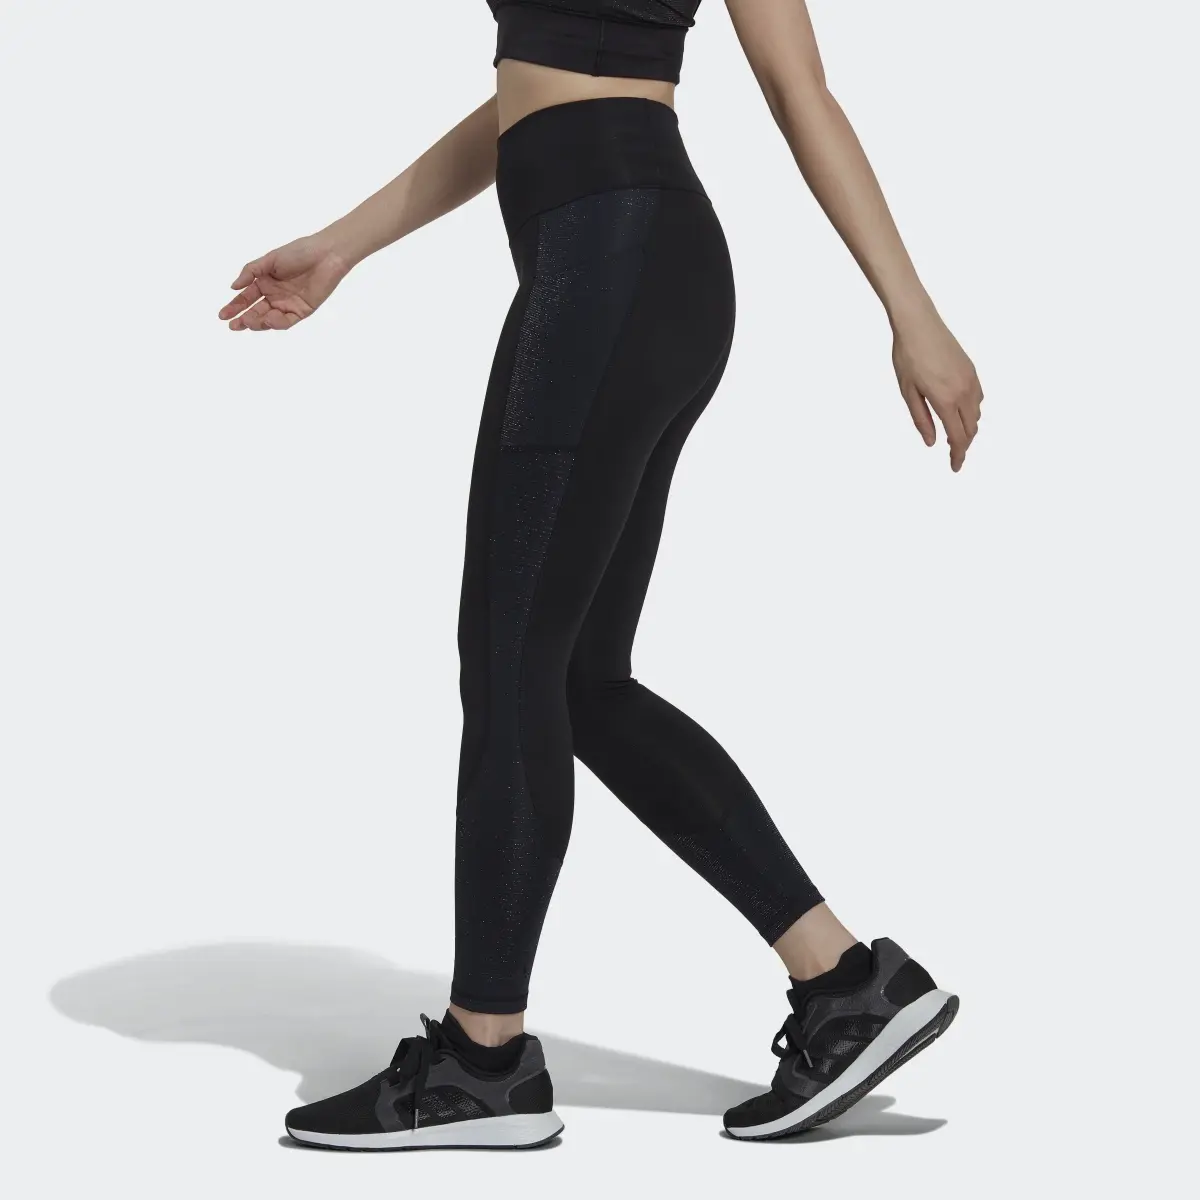 Adidas Optime Training Shiny Full Length Leggings. 2